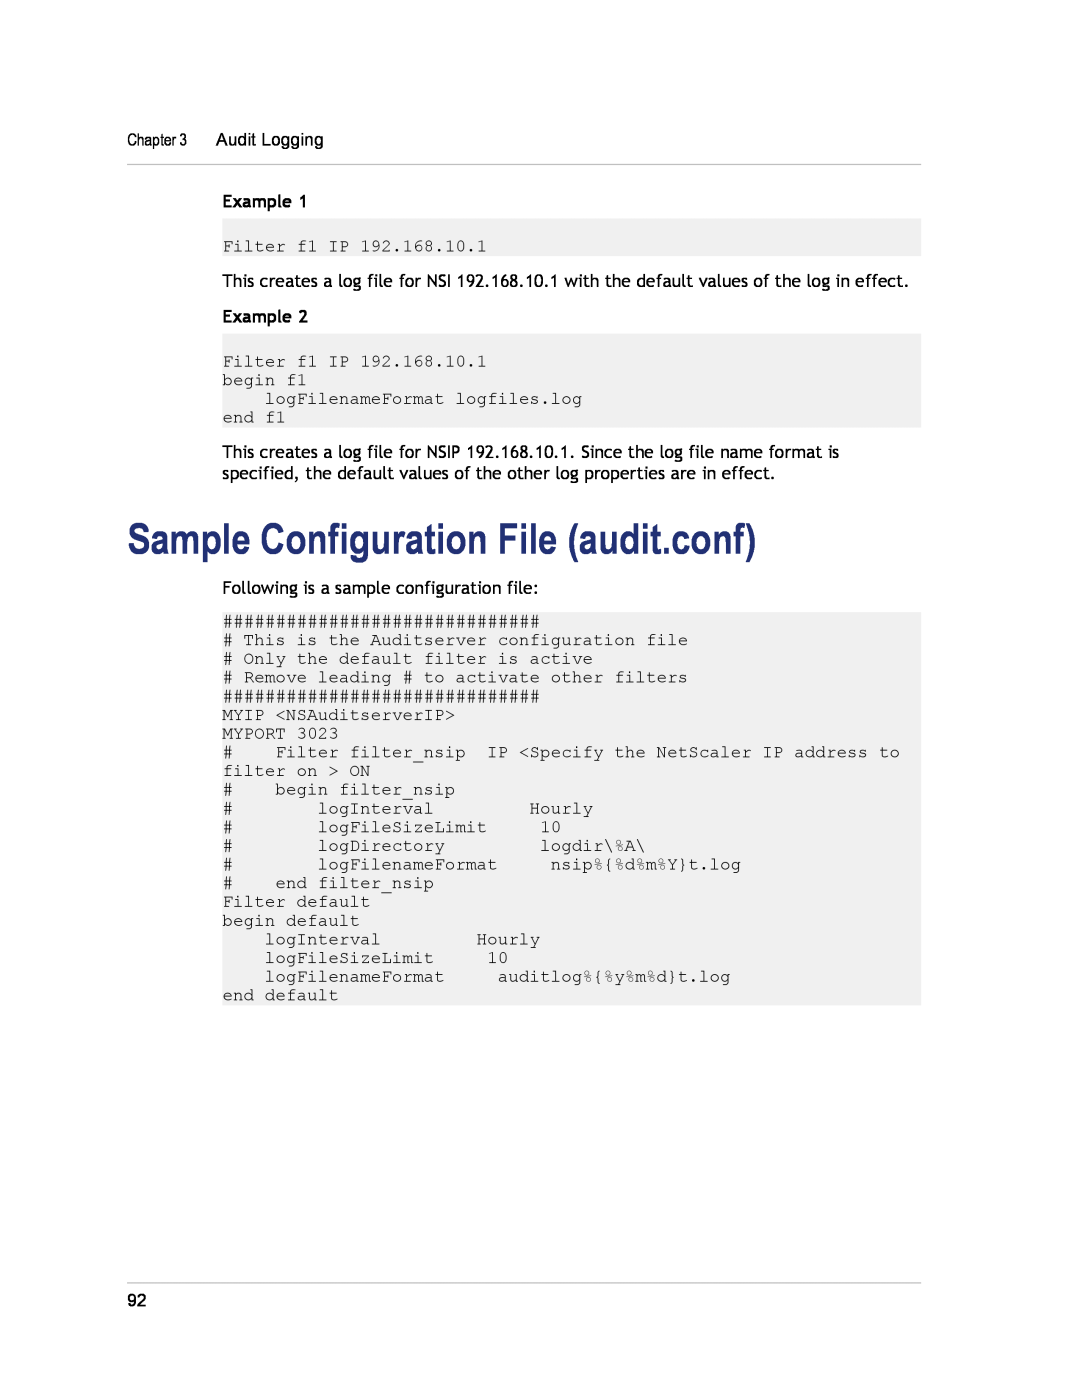 Citrix Systems CITRIX NETSCALER 9.3 manual Sample Configuration File audit.conf, Example 